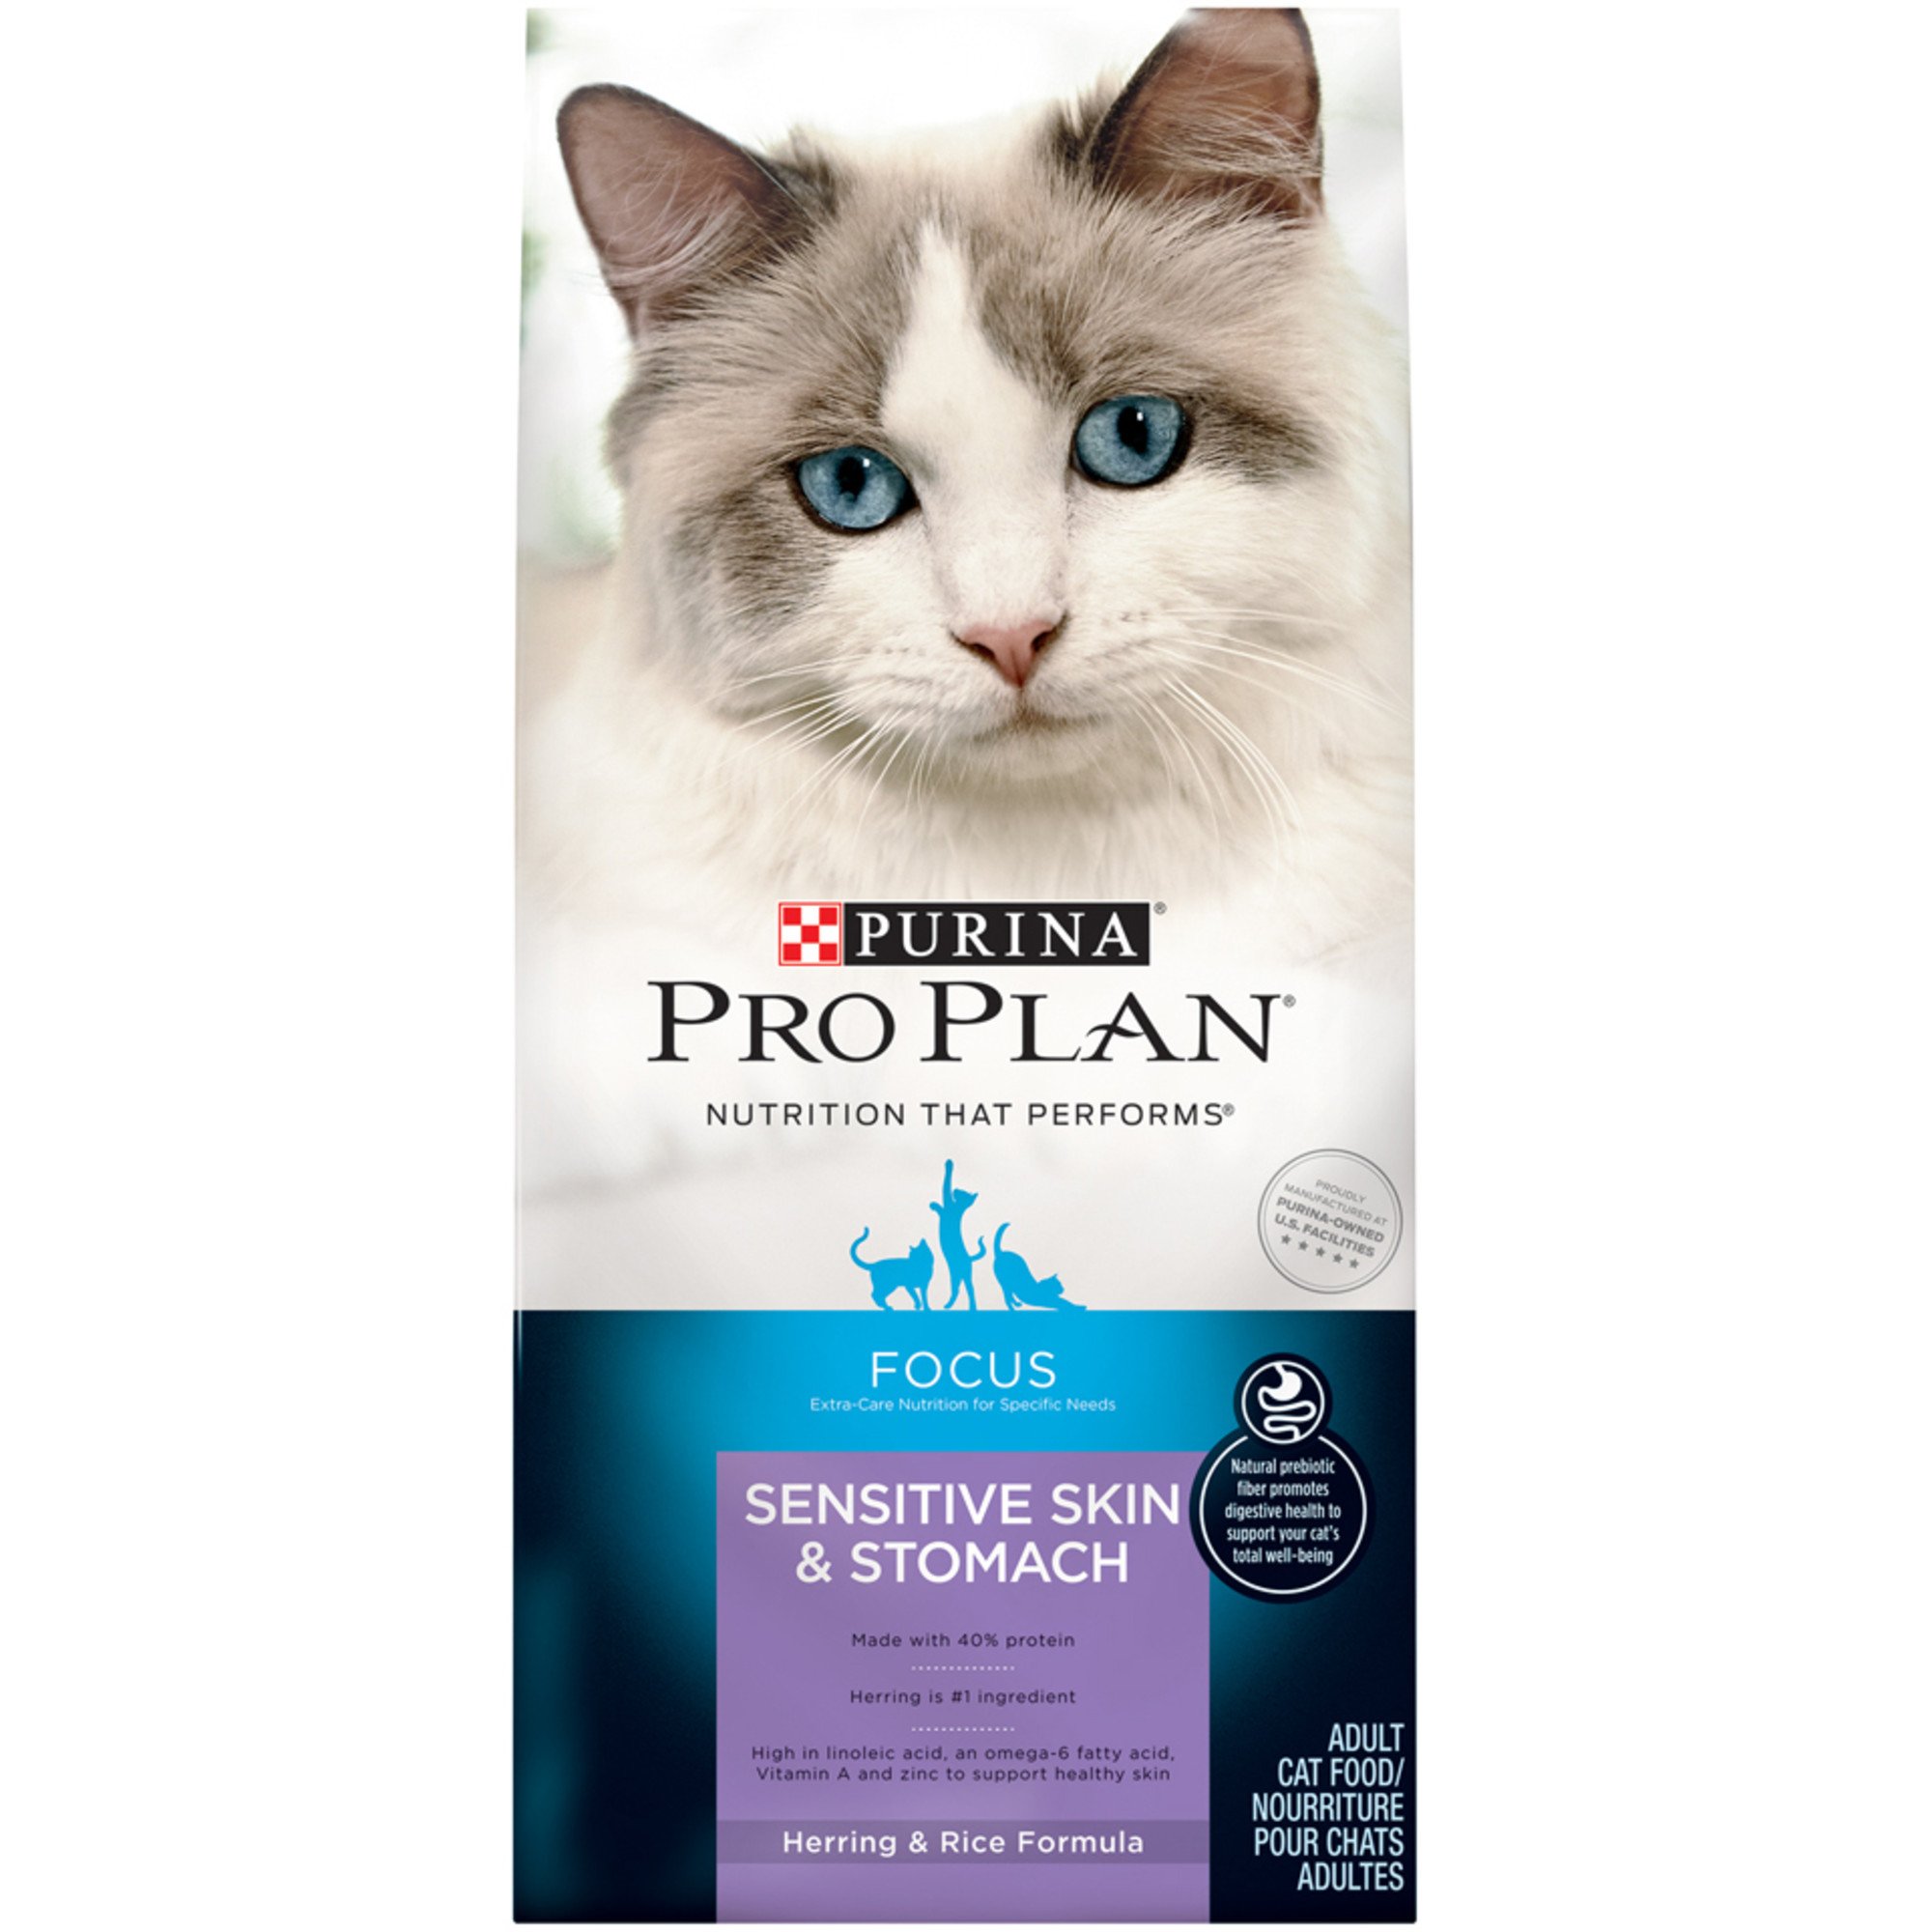 Pro Plan Focus Sensitive Skin Stomach Herring Rice Adult Cat Food 35 Lbs Petco